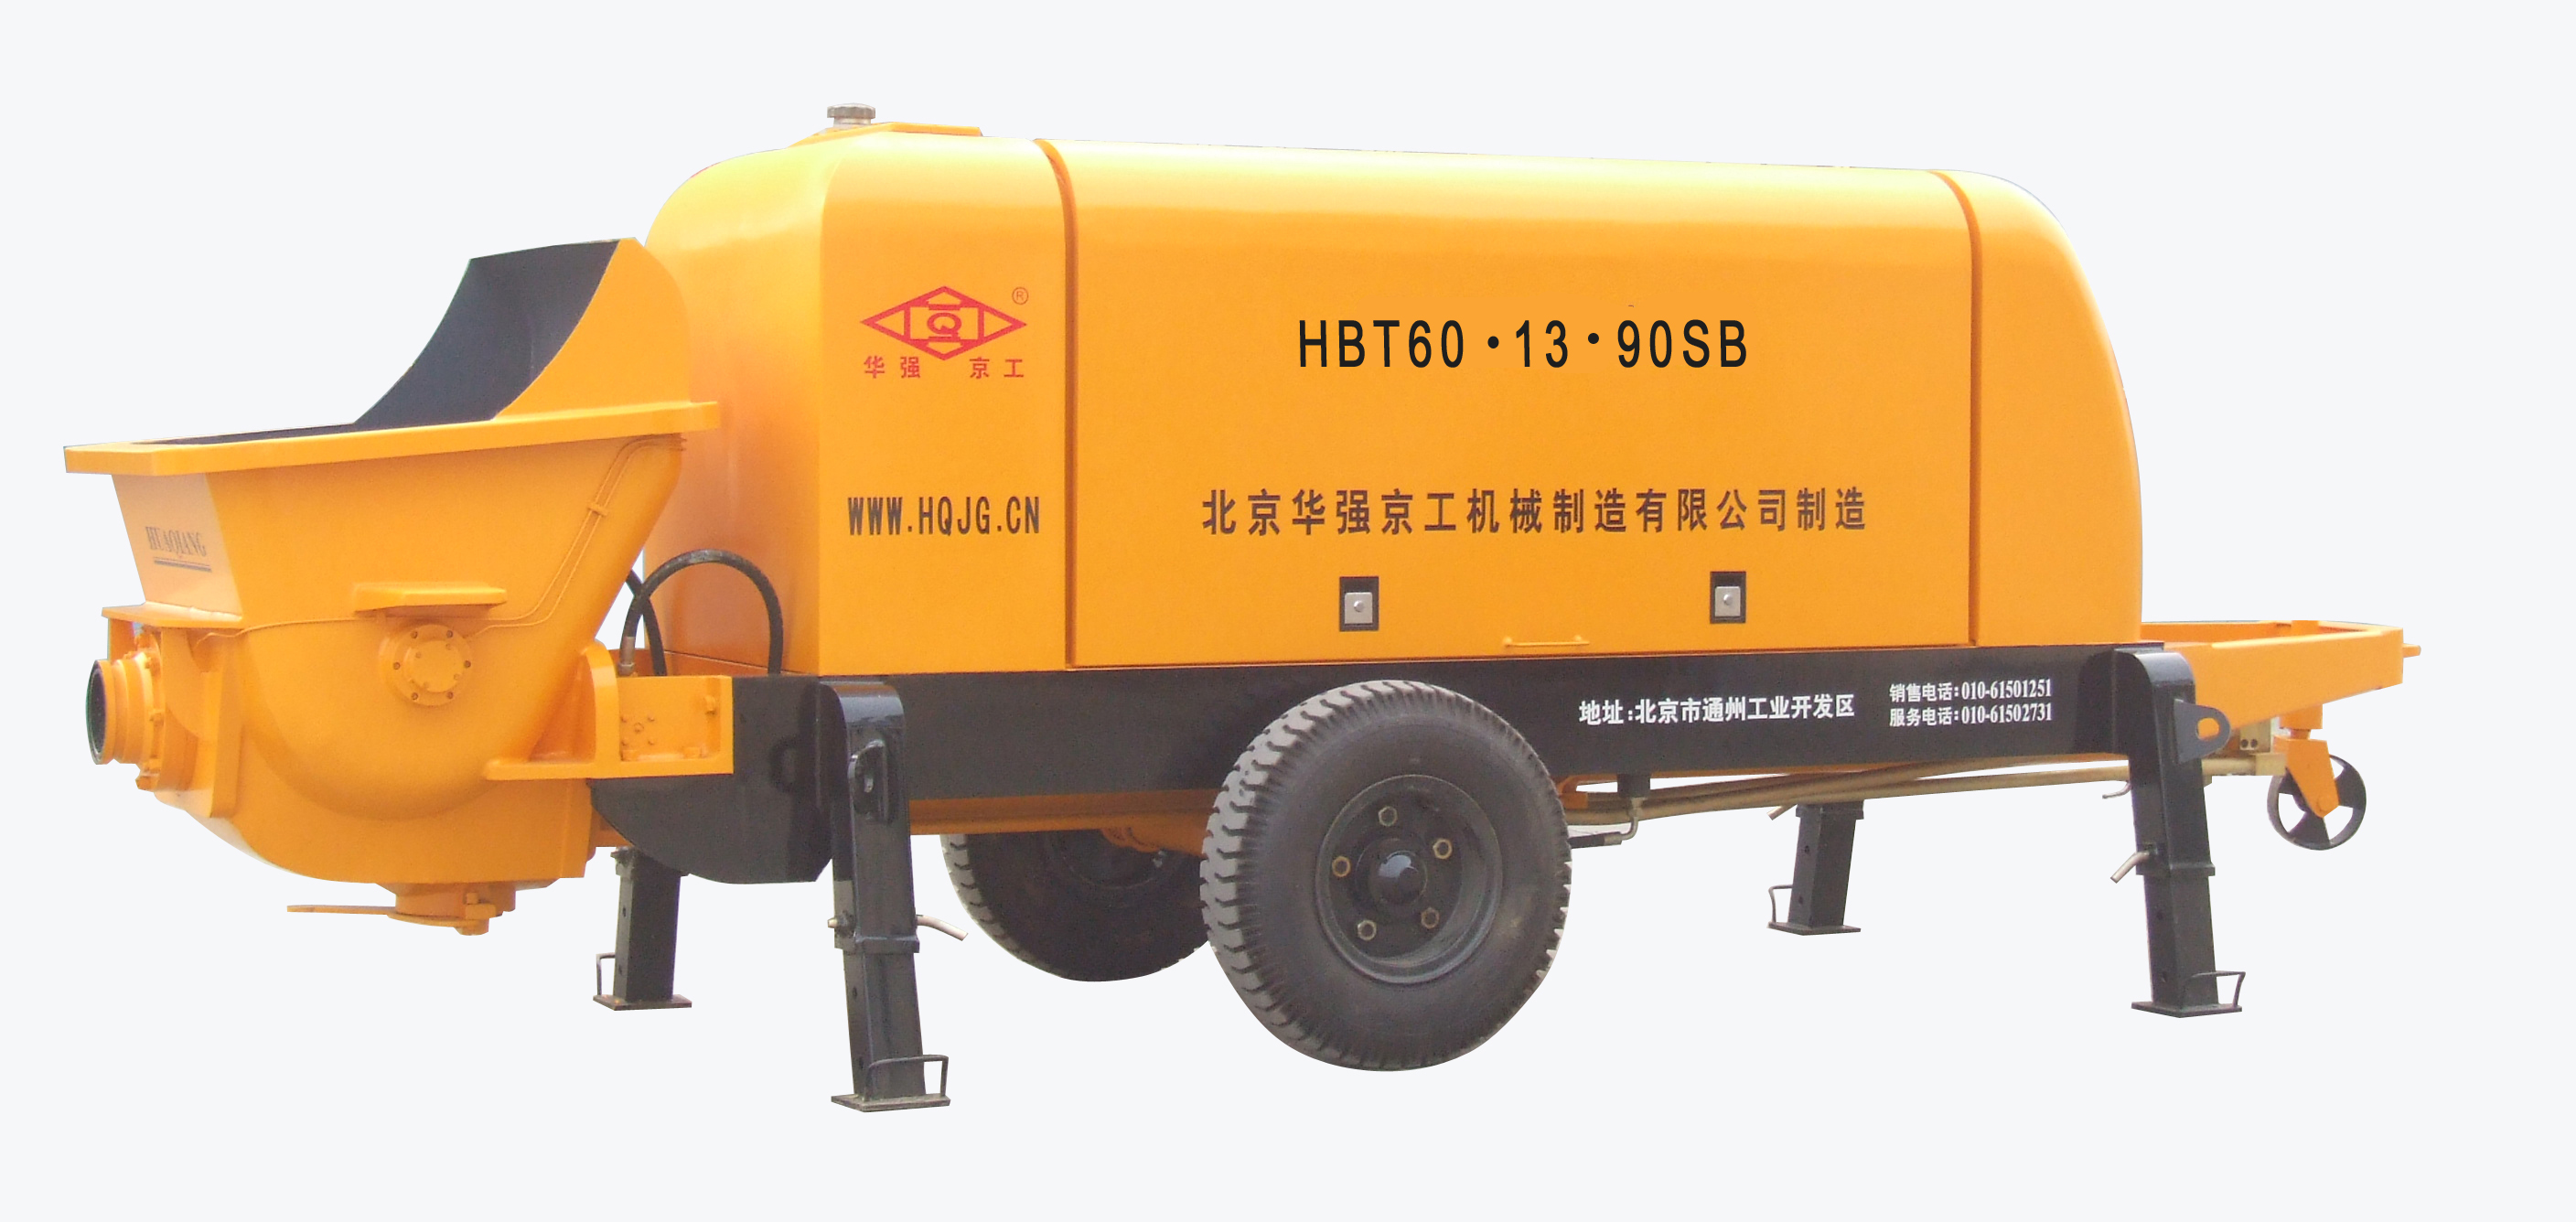 90sb拖式电动混凝土输送泵和hbt80c